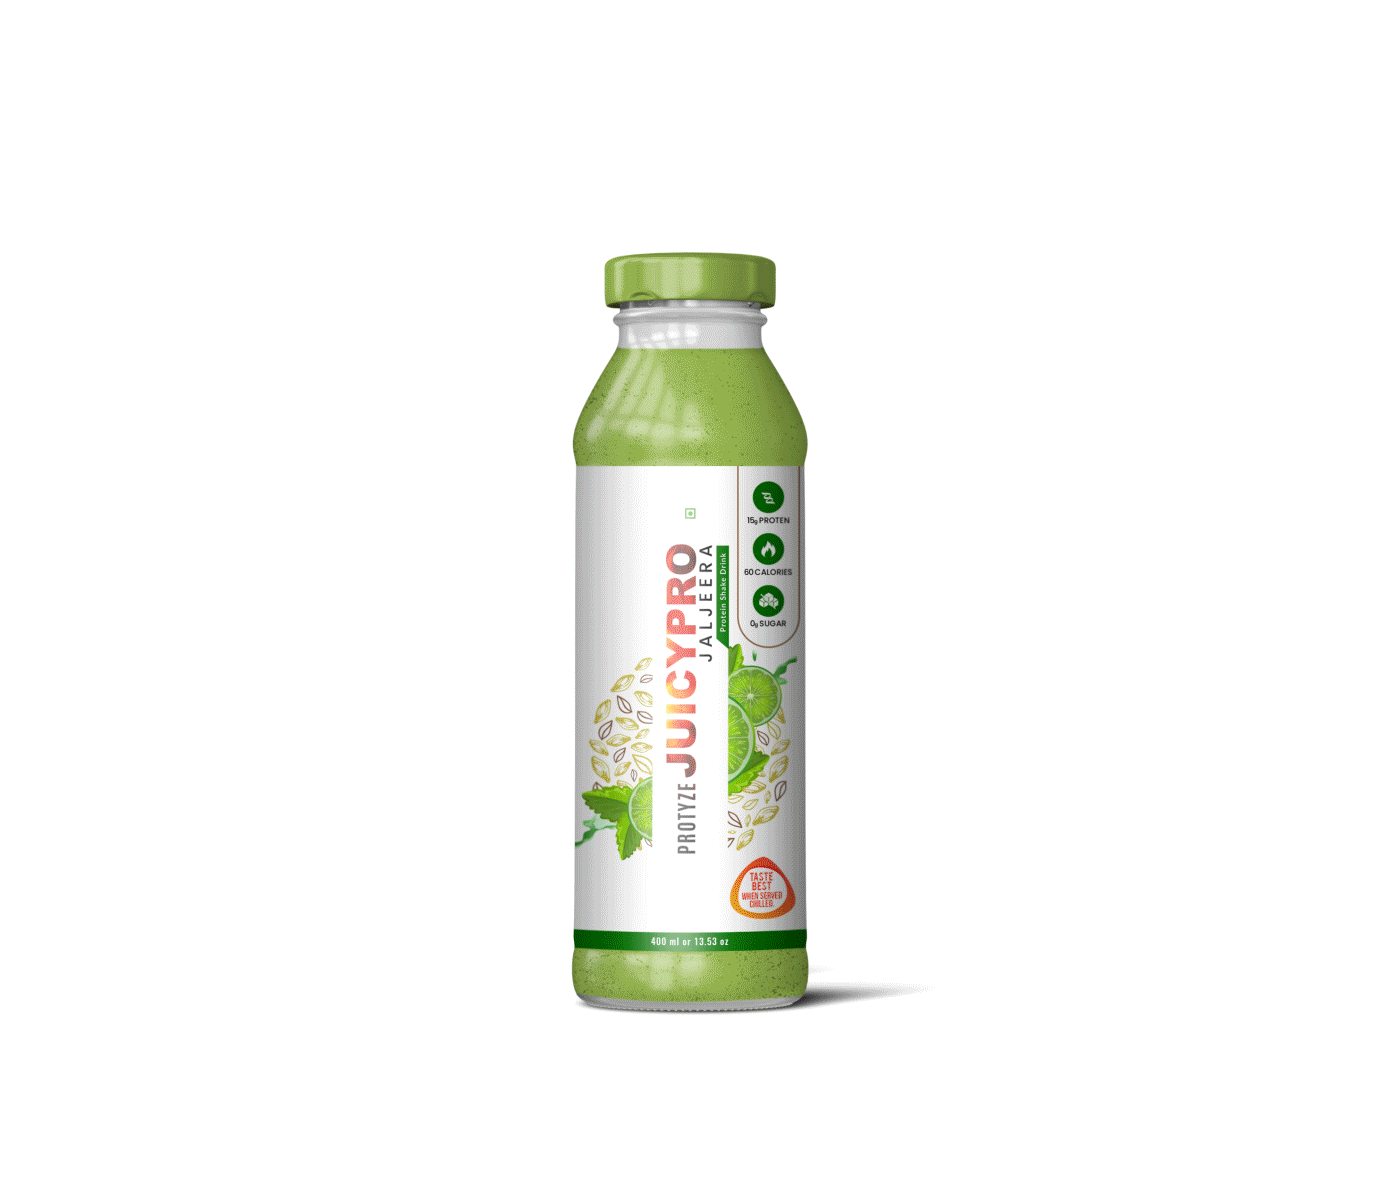 Label label design Packaging product packaging juice Rabbixel fruit juice Protein Juice Drink Packaging animation 